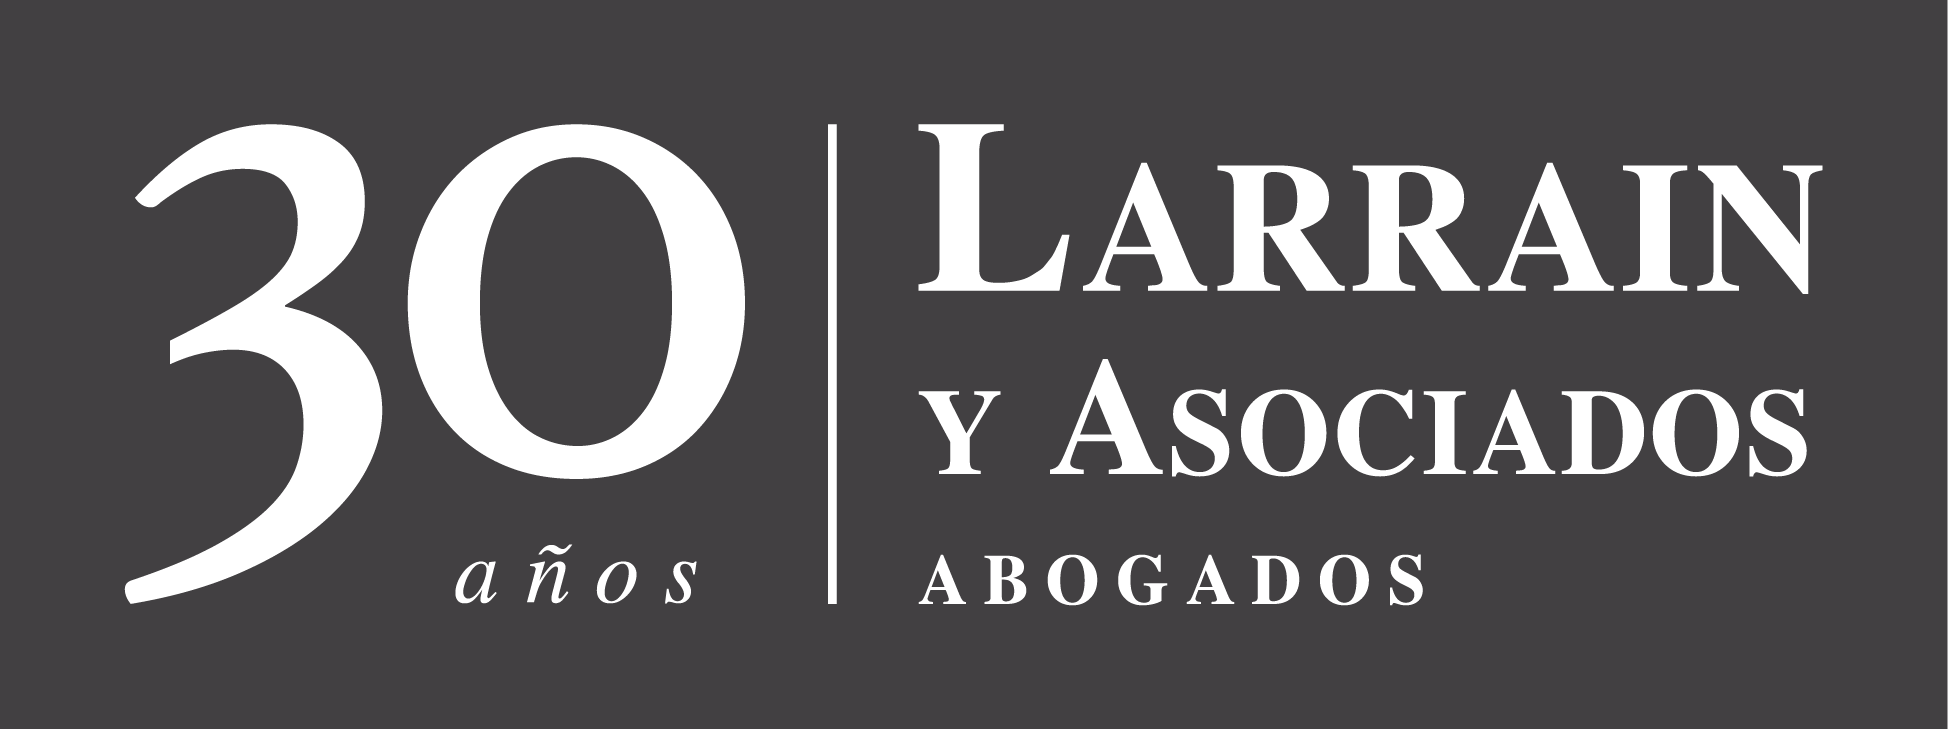 LANIVERSARIO_Logo-Blanco-gris